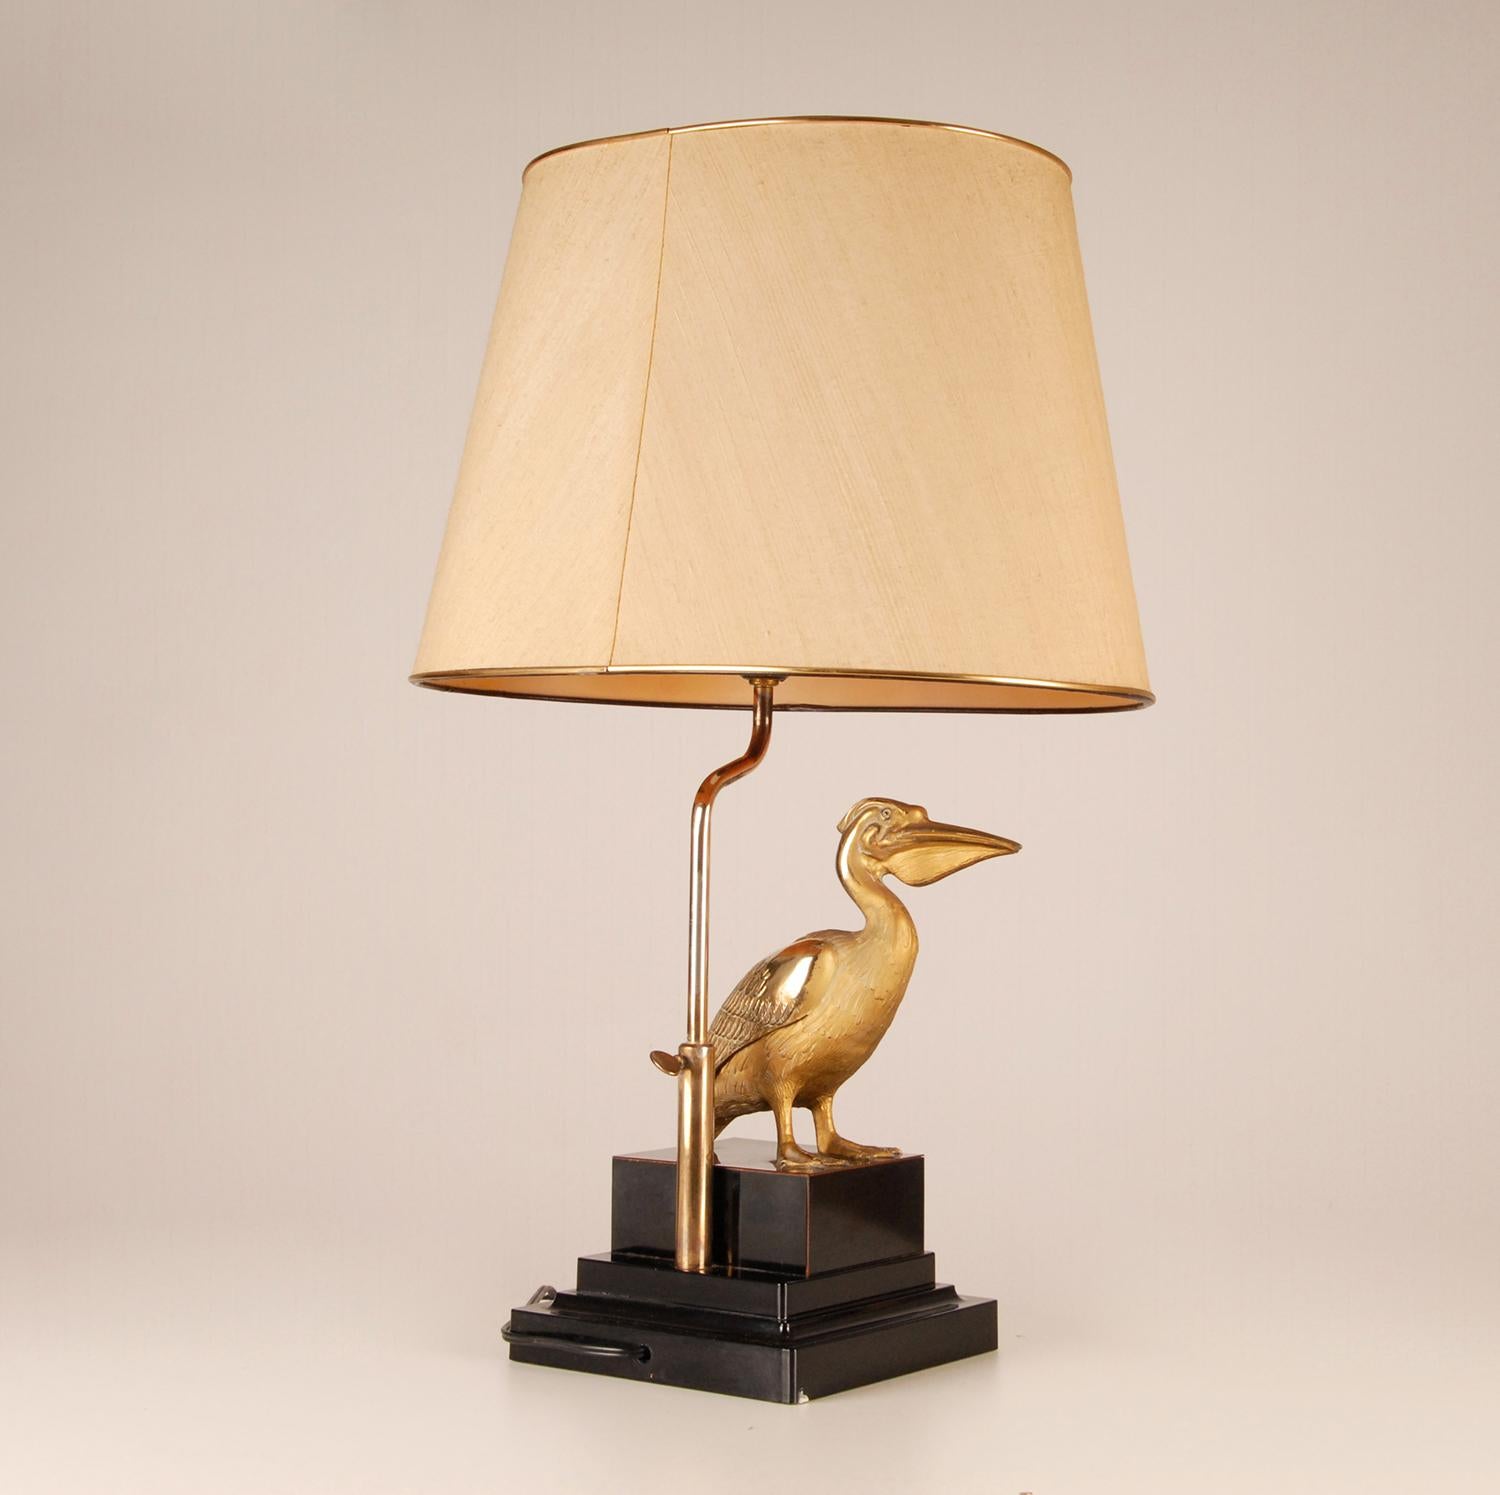 Cast Maison Charles Gilt Brass Black Figural Table Lamp Pelican 1970s Mid Century